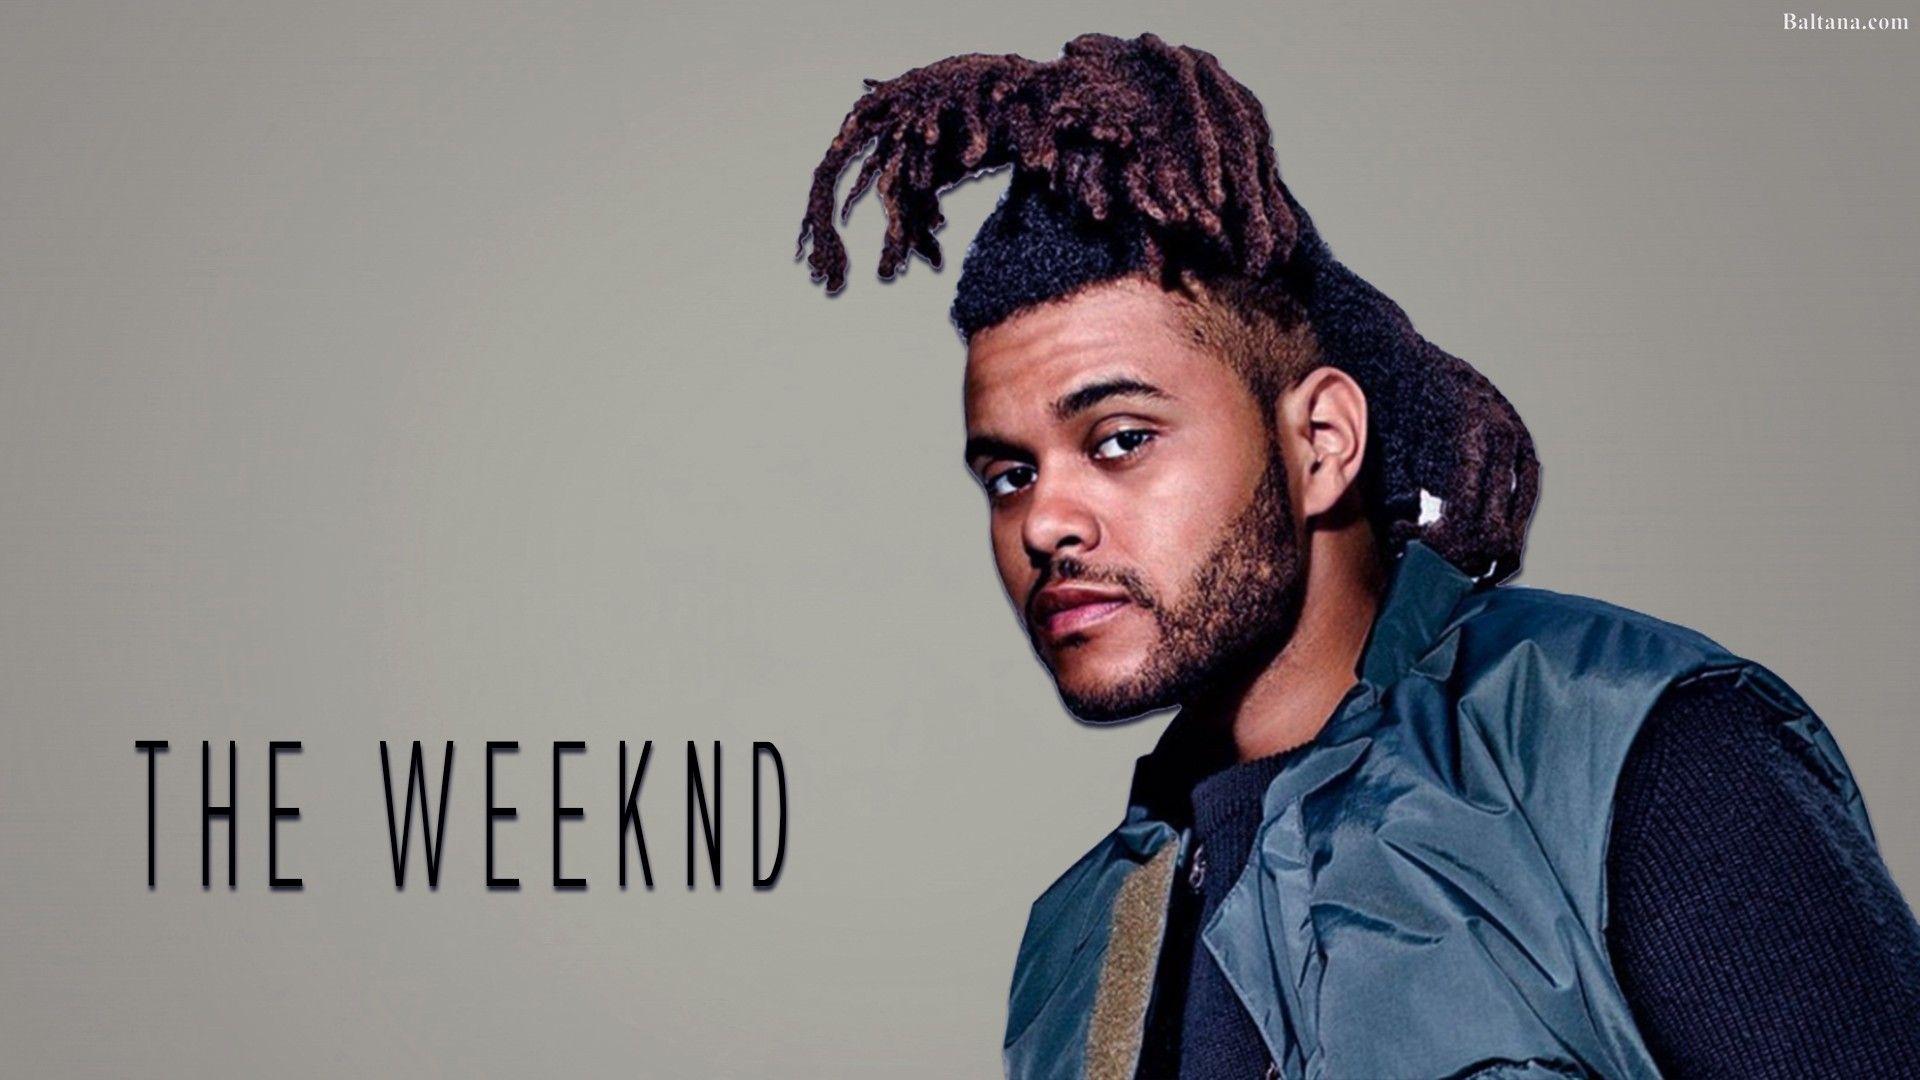 The Weeknd Desktop Wallpapers - Top Free The Weeknd ...